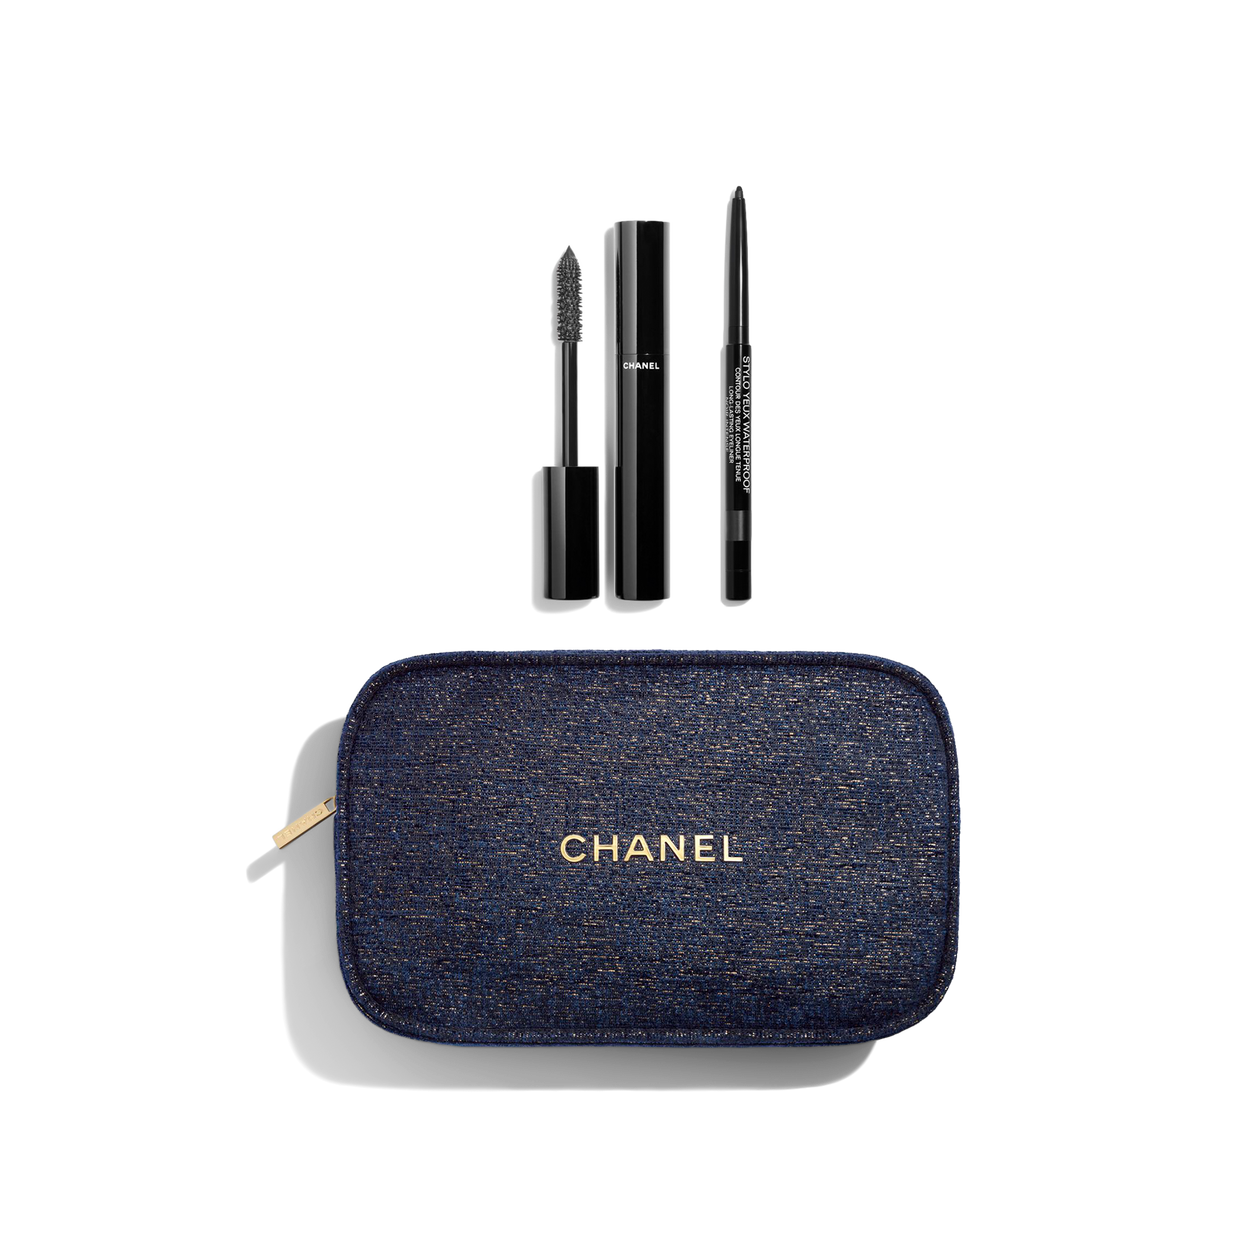 Chanel CHANEL - Le Volume De Chanel Mascara - # 10 Noir 6g/0.21oz. 2023, Buy Chanel Online